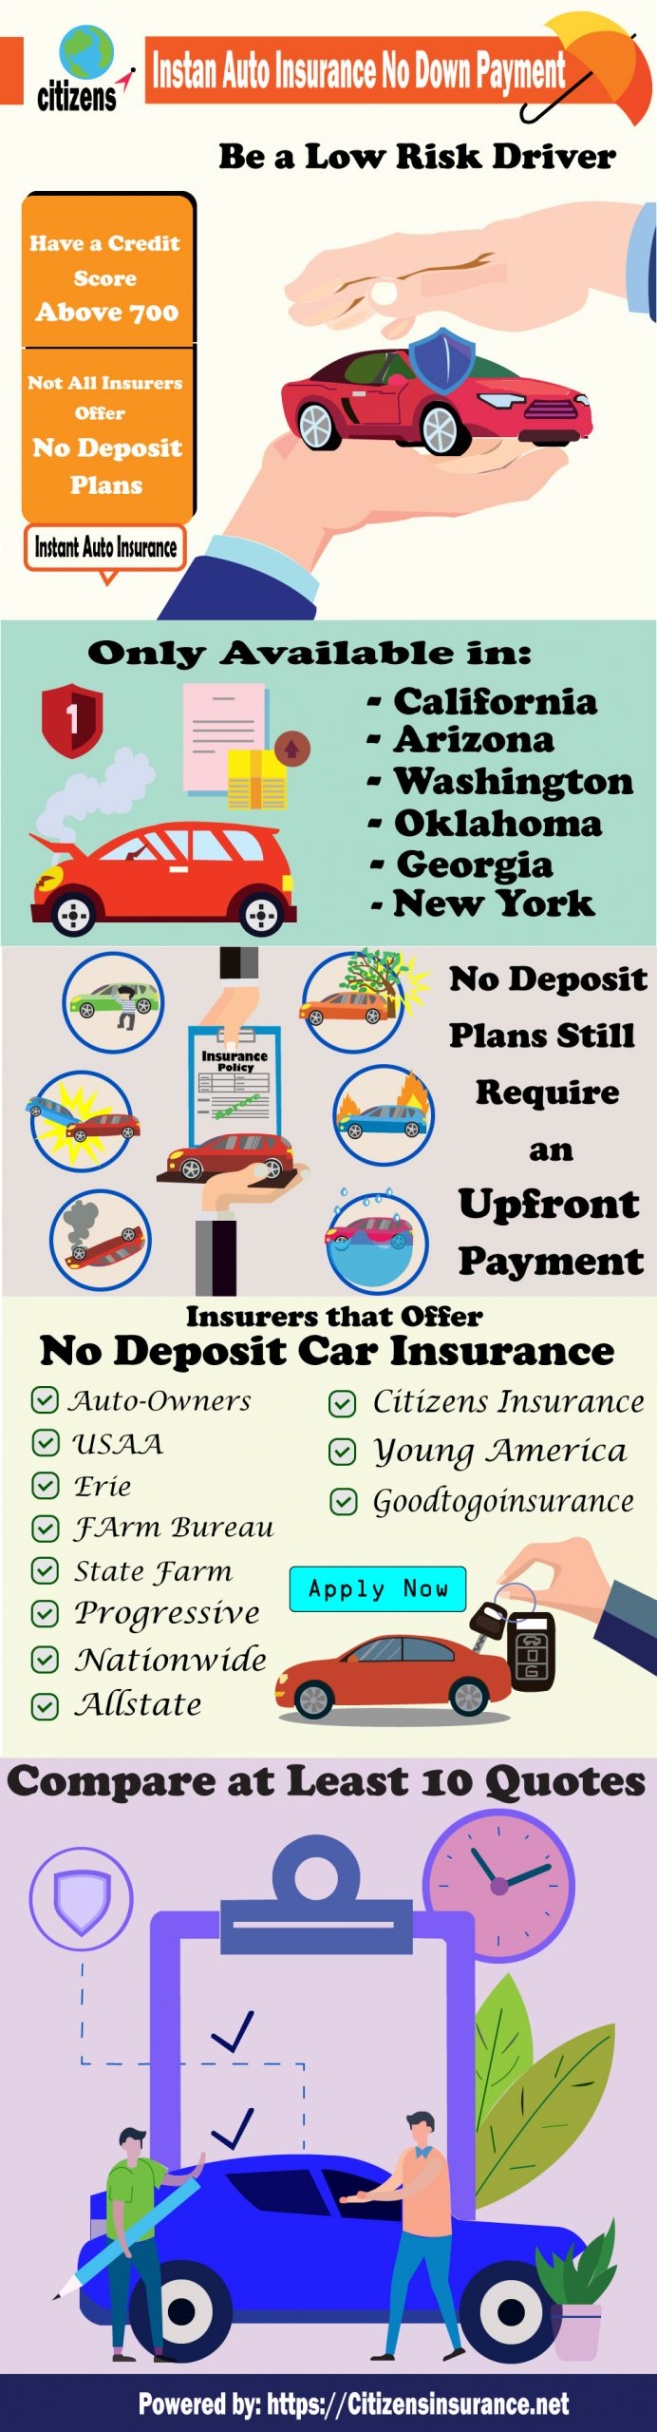 instant auto insurance Bulan 2 Instant Auto Insurance No Down Payment  Citizens Insurance